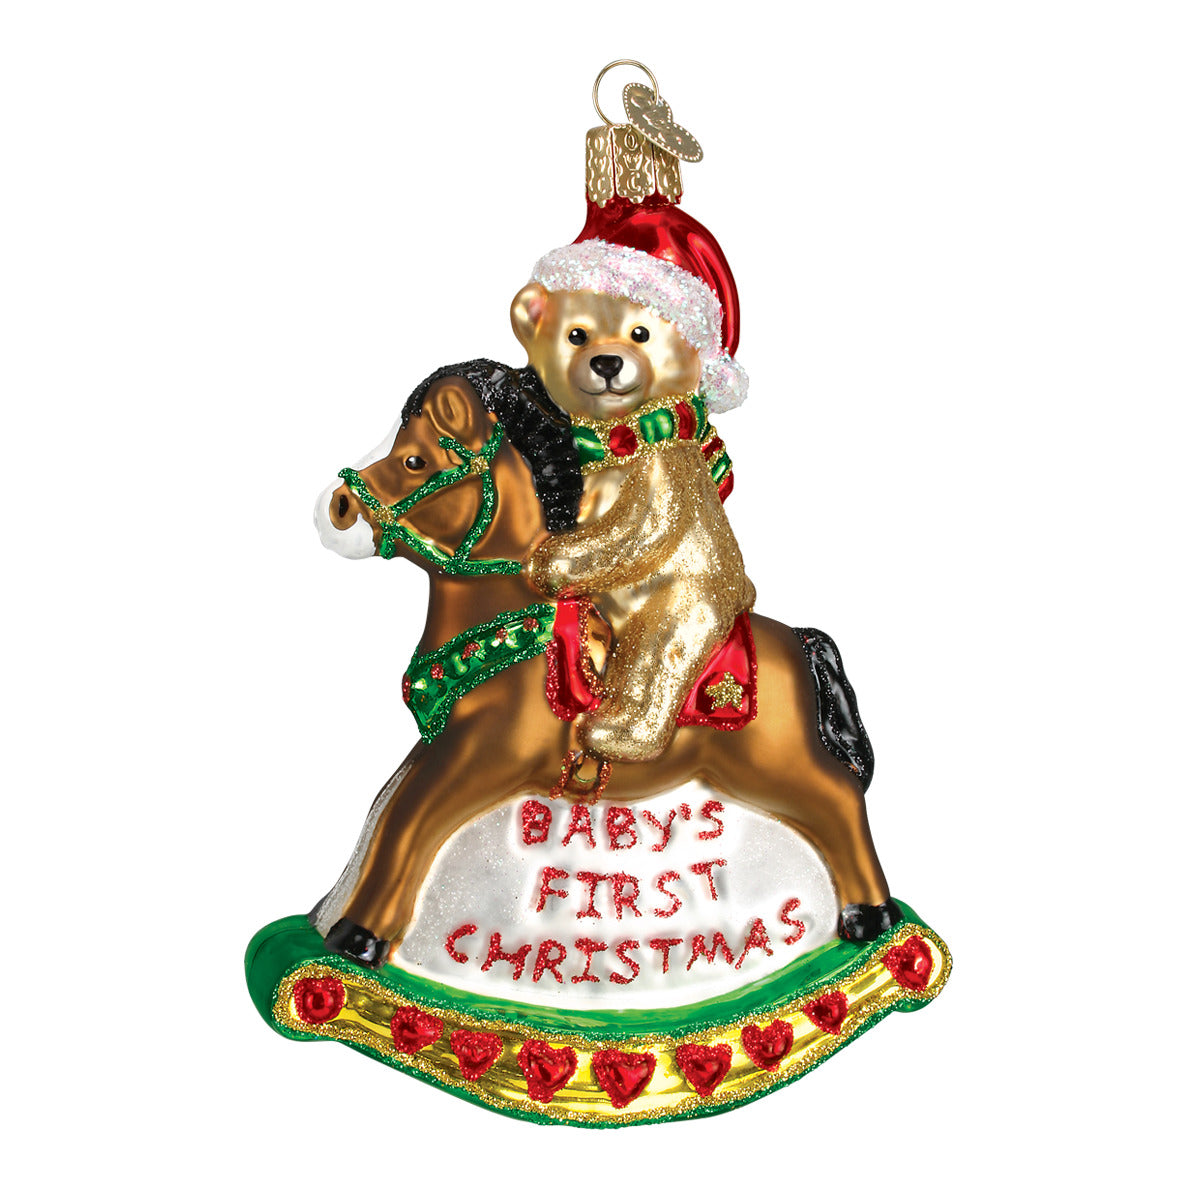 Old World Christmas Ornament Rocking Horse Teddy Ornament